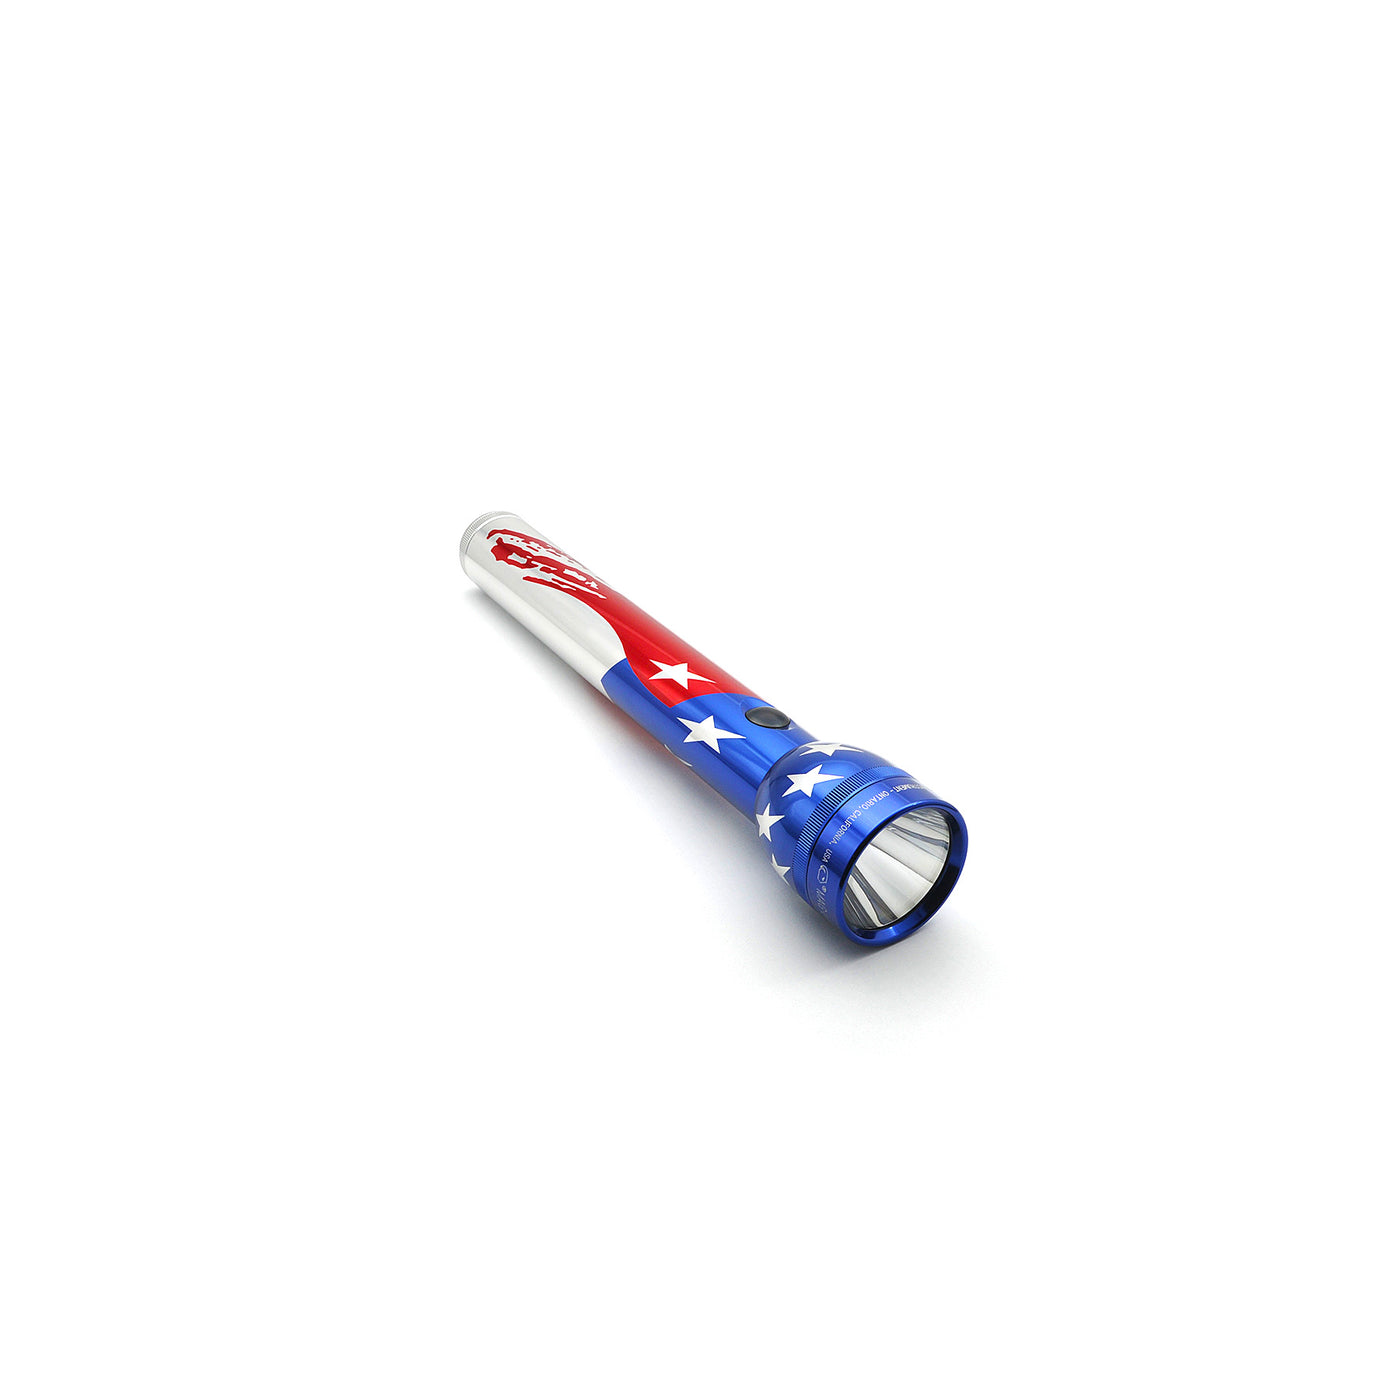 Flag-lite Limited Edition Maglite LED Flashlight